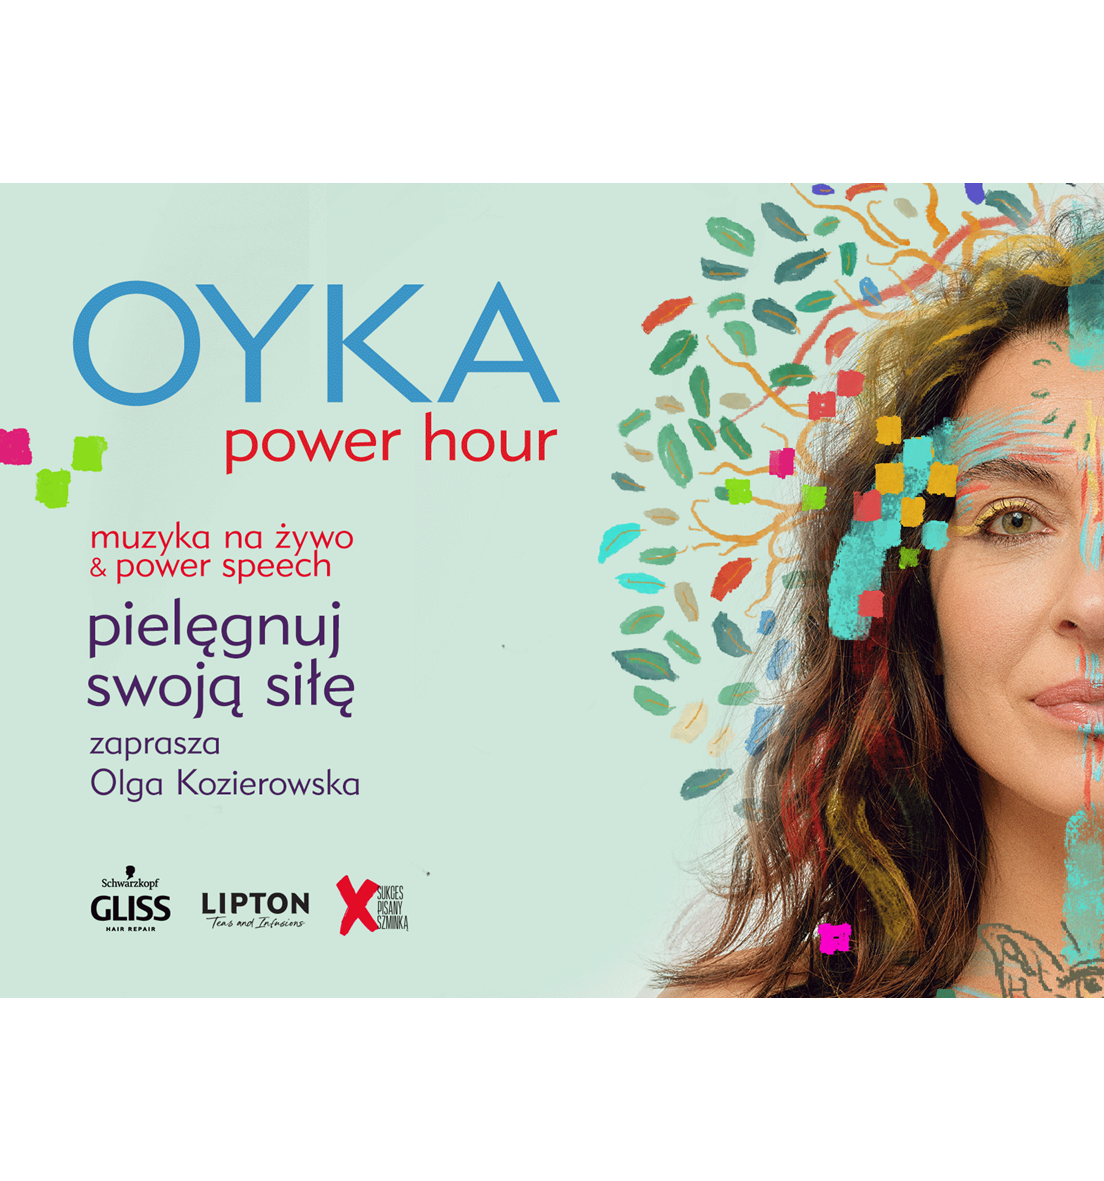 OYKA Power Hour